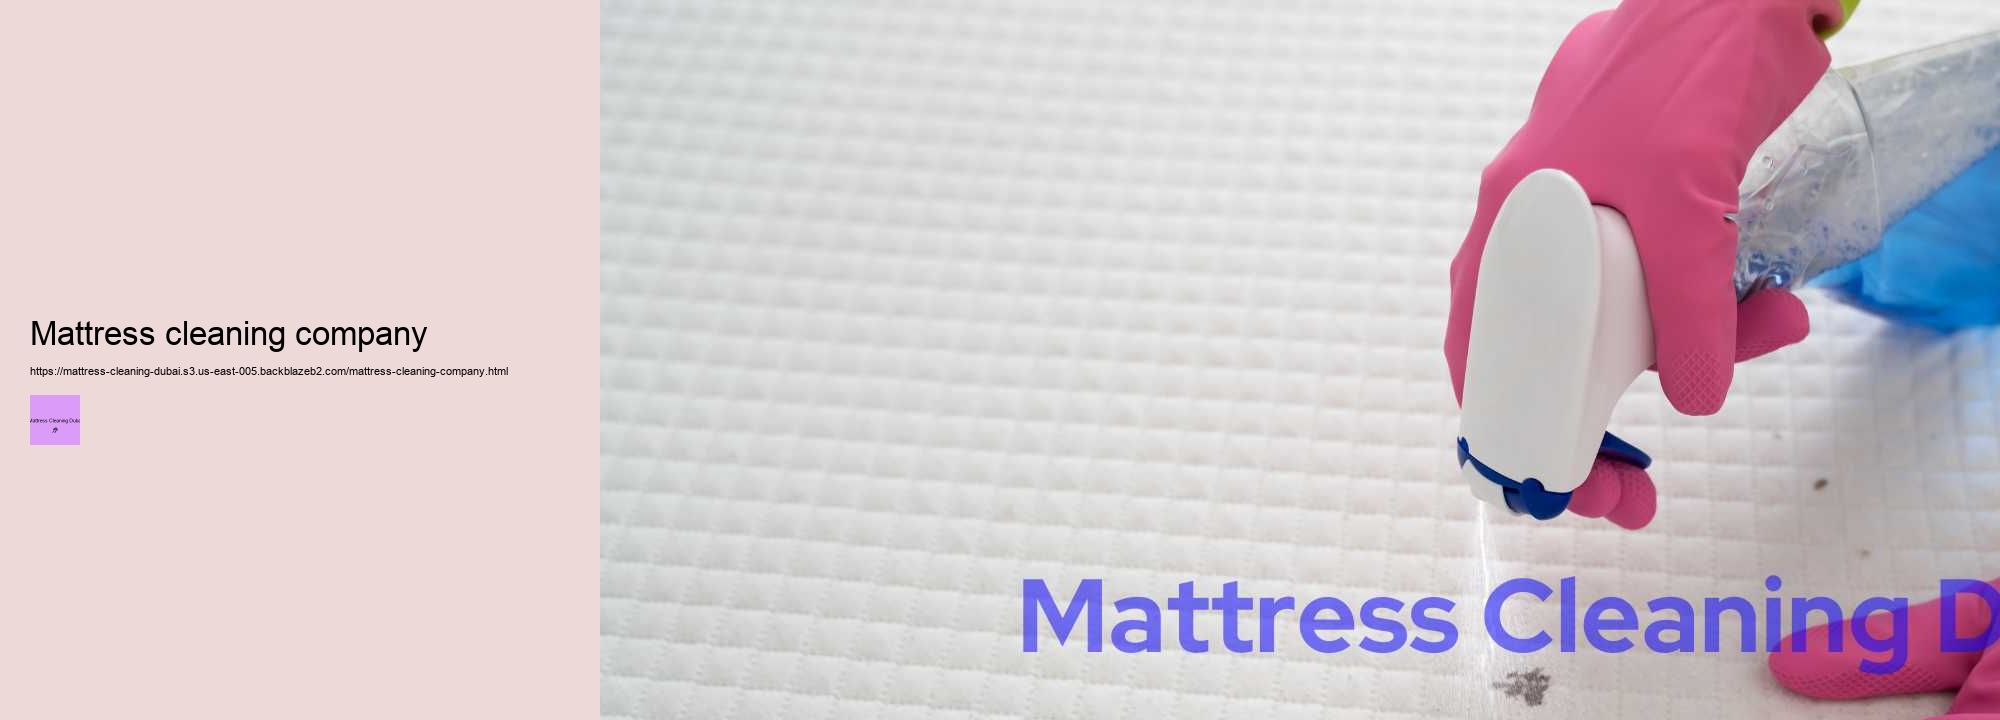 Mattress cleaning company